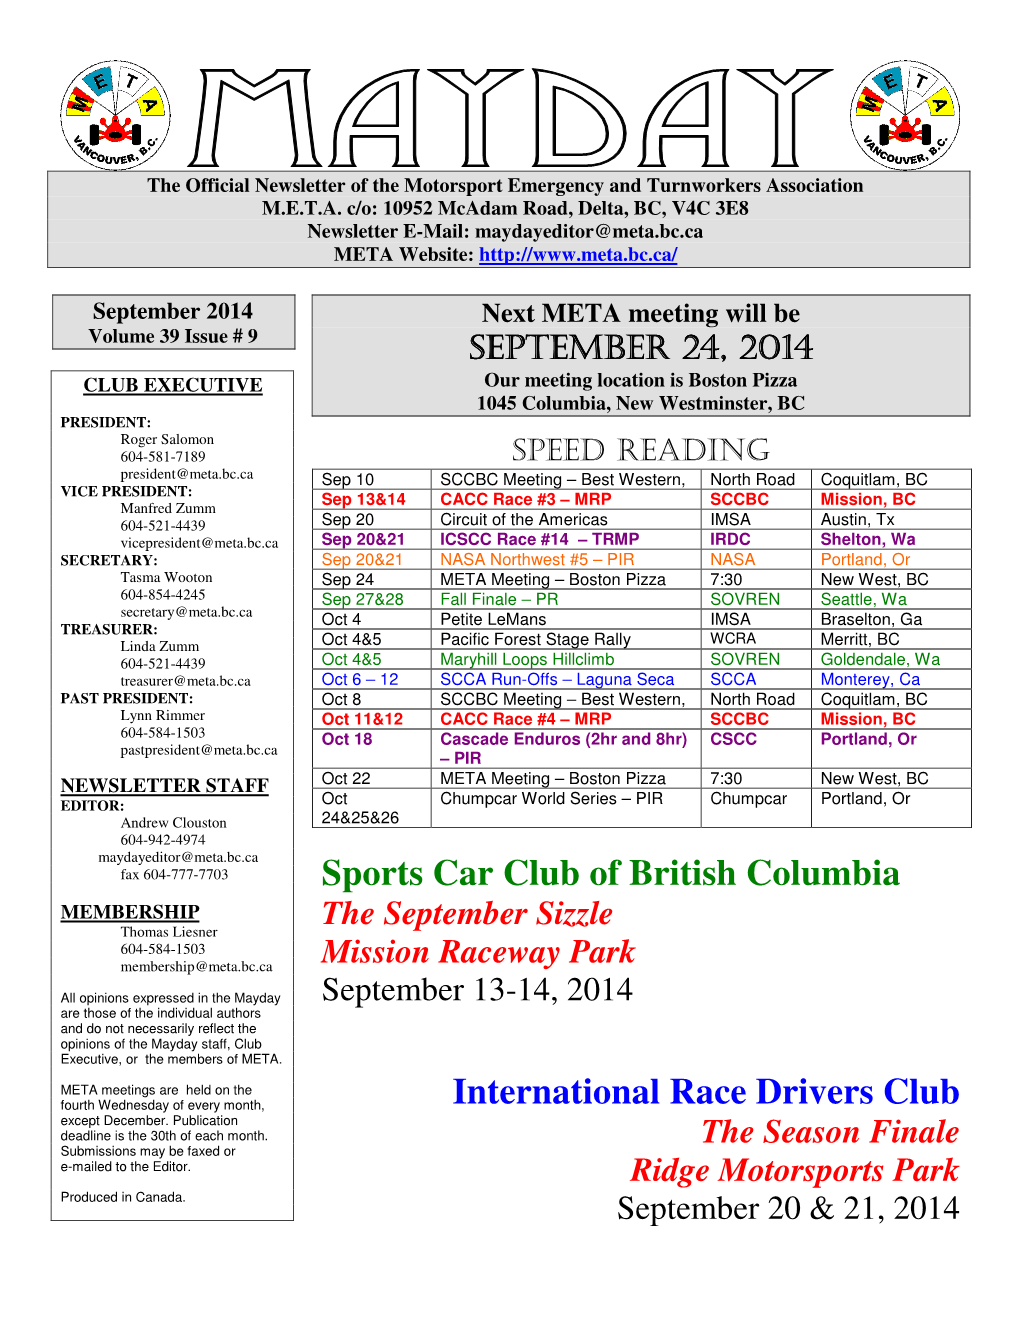 Sports Car Club of British Columbia International Race Drivers Club